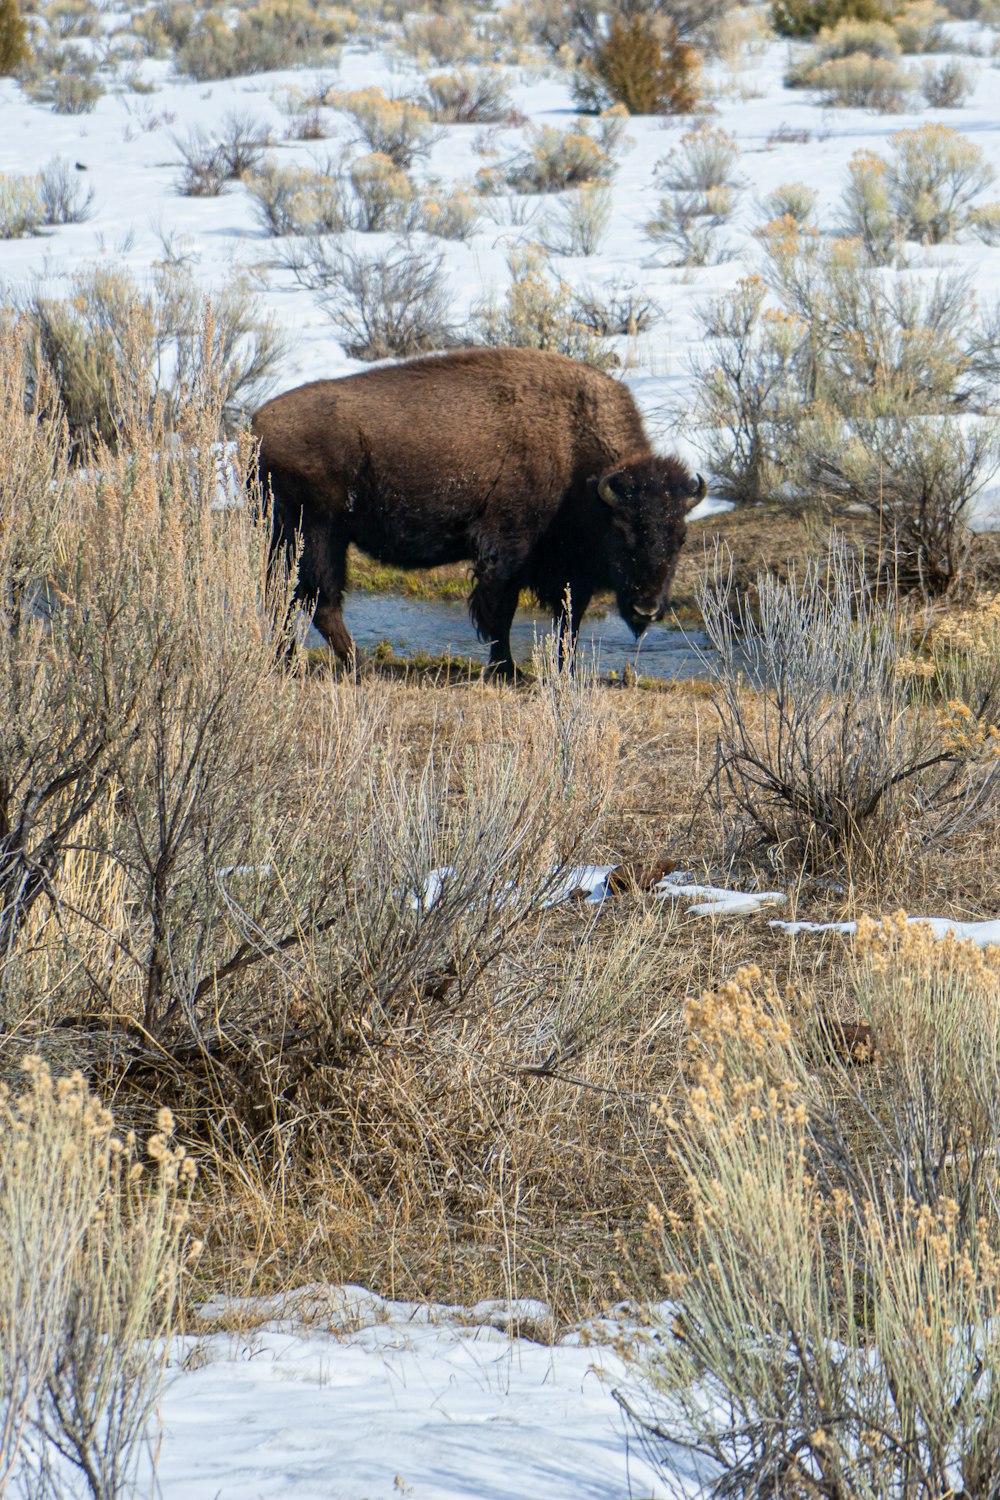 a bison is walking through a snowy field